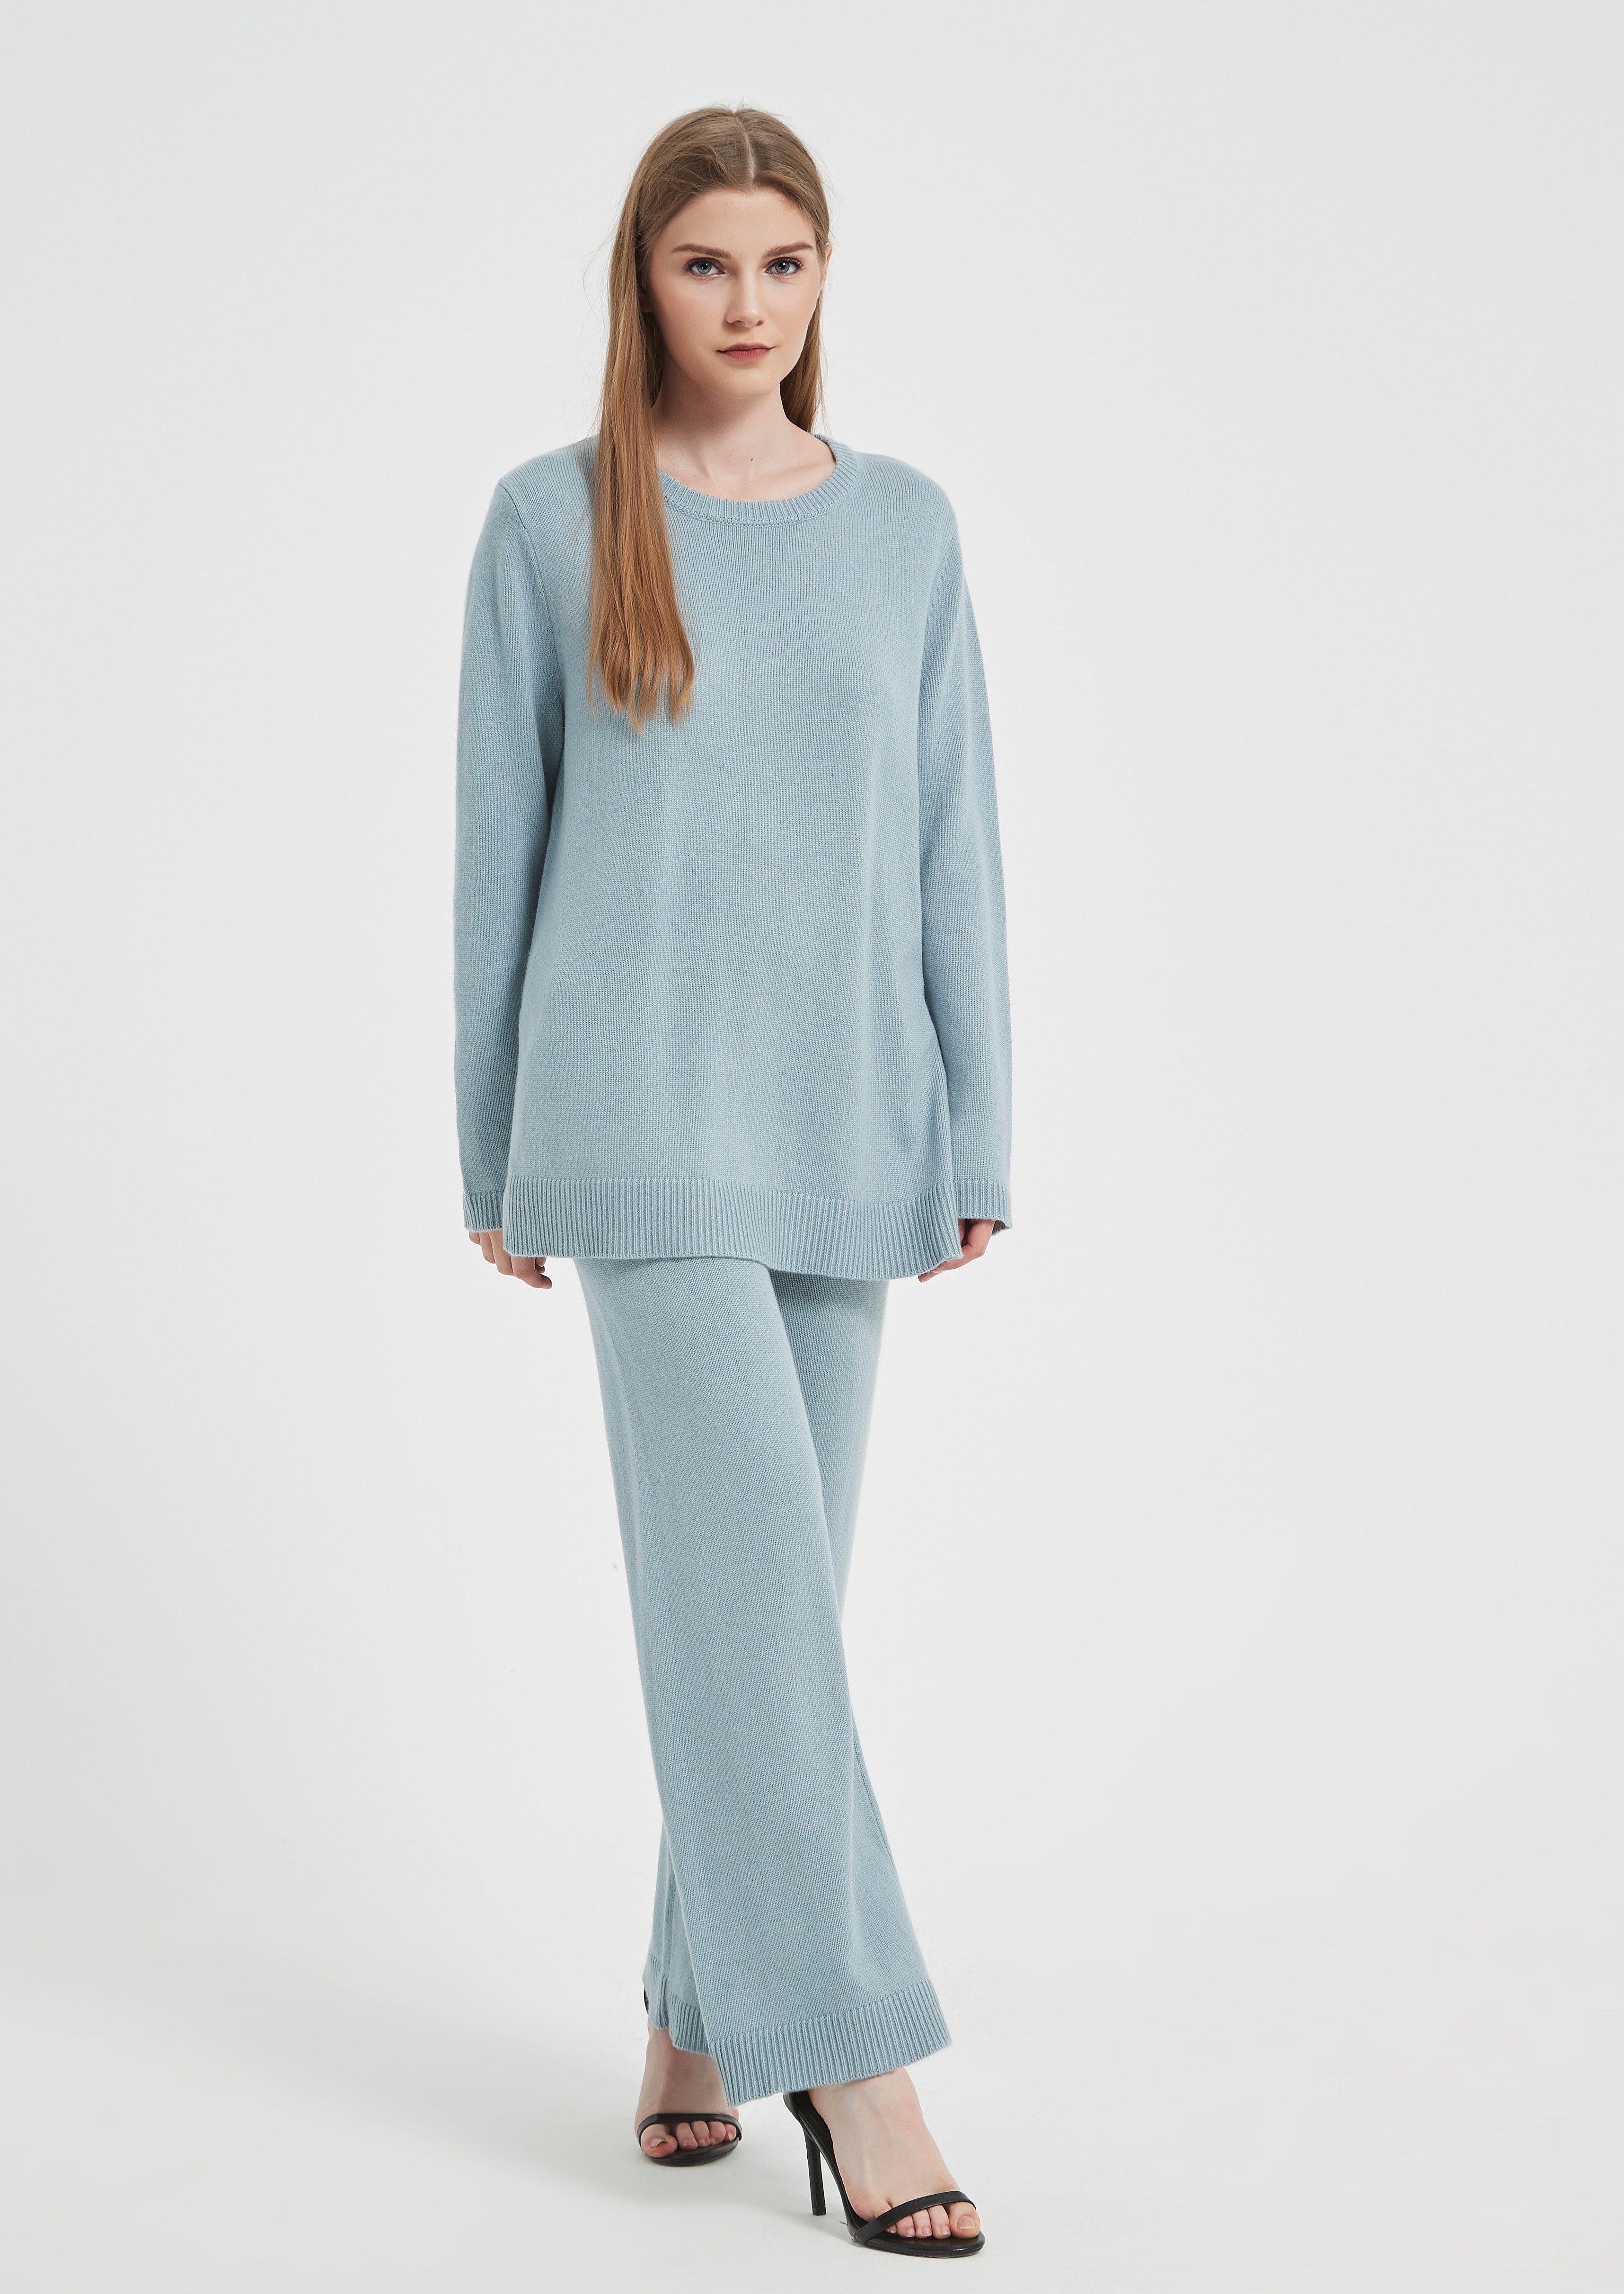 Elandra Knit Sweater - Baby blue